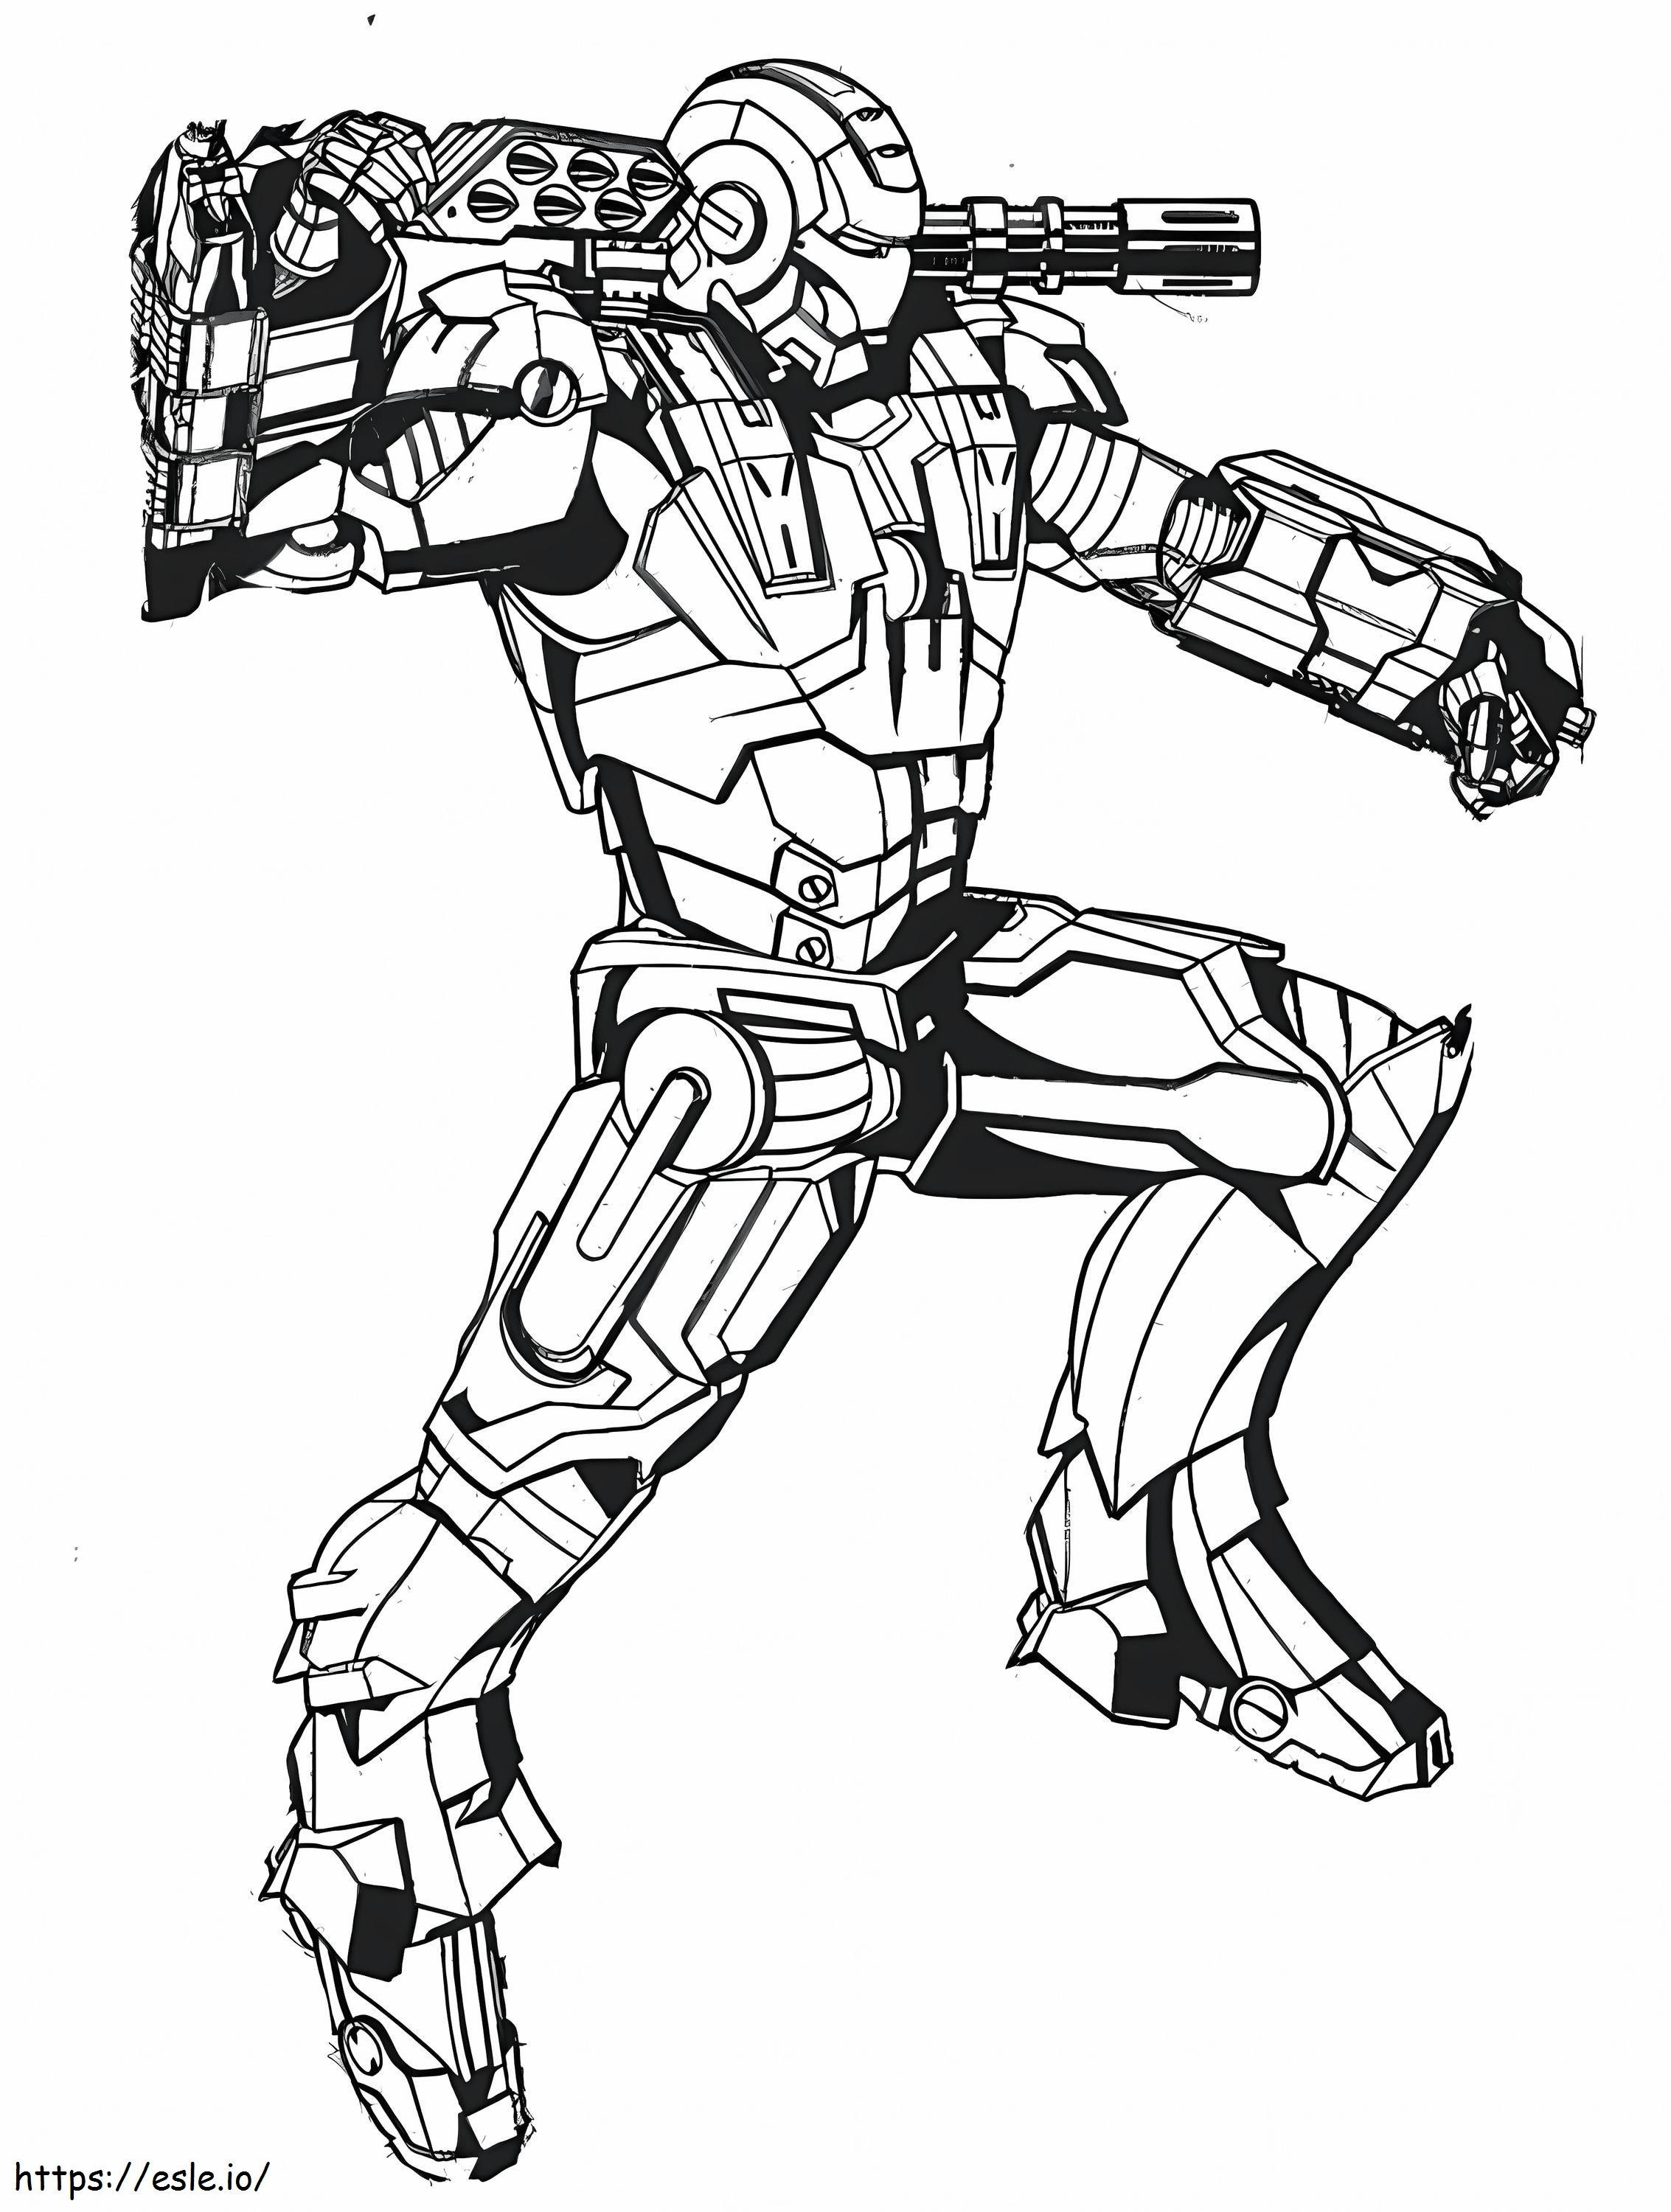 Ironman War Machine coloring page